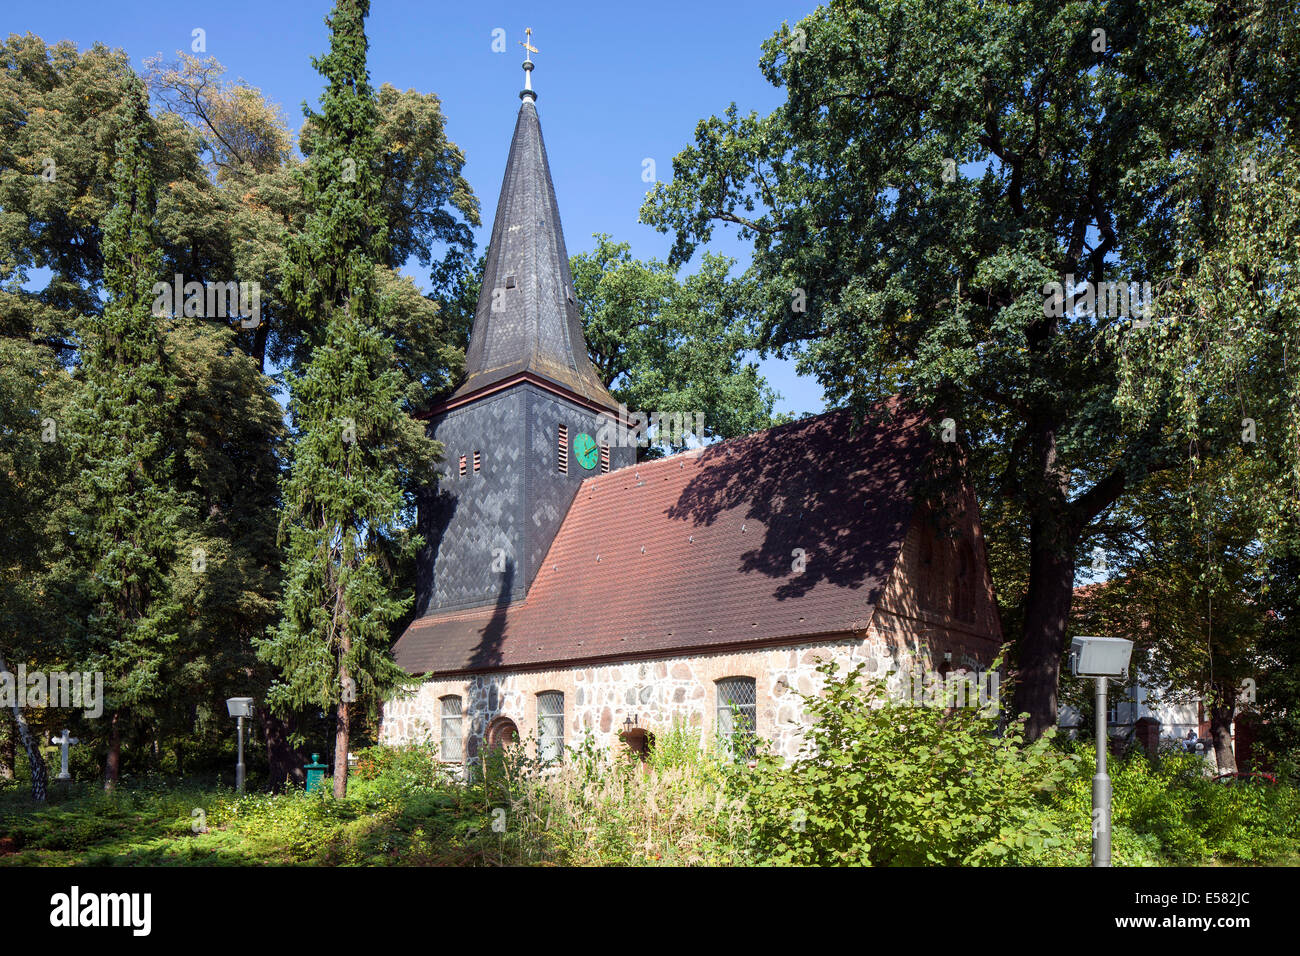 Wittenau village church from the 15th century, Reinickendorf, Berlin, Germany Stock Photo